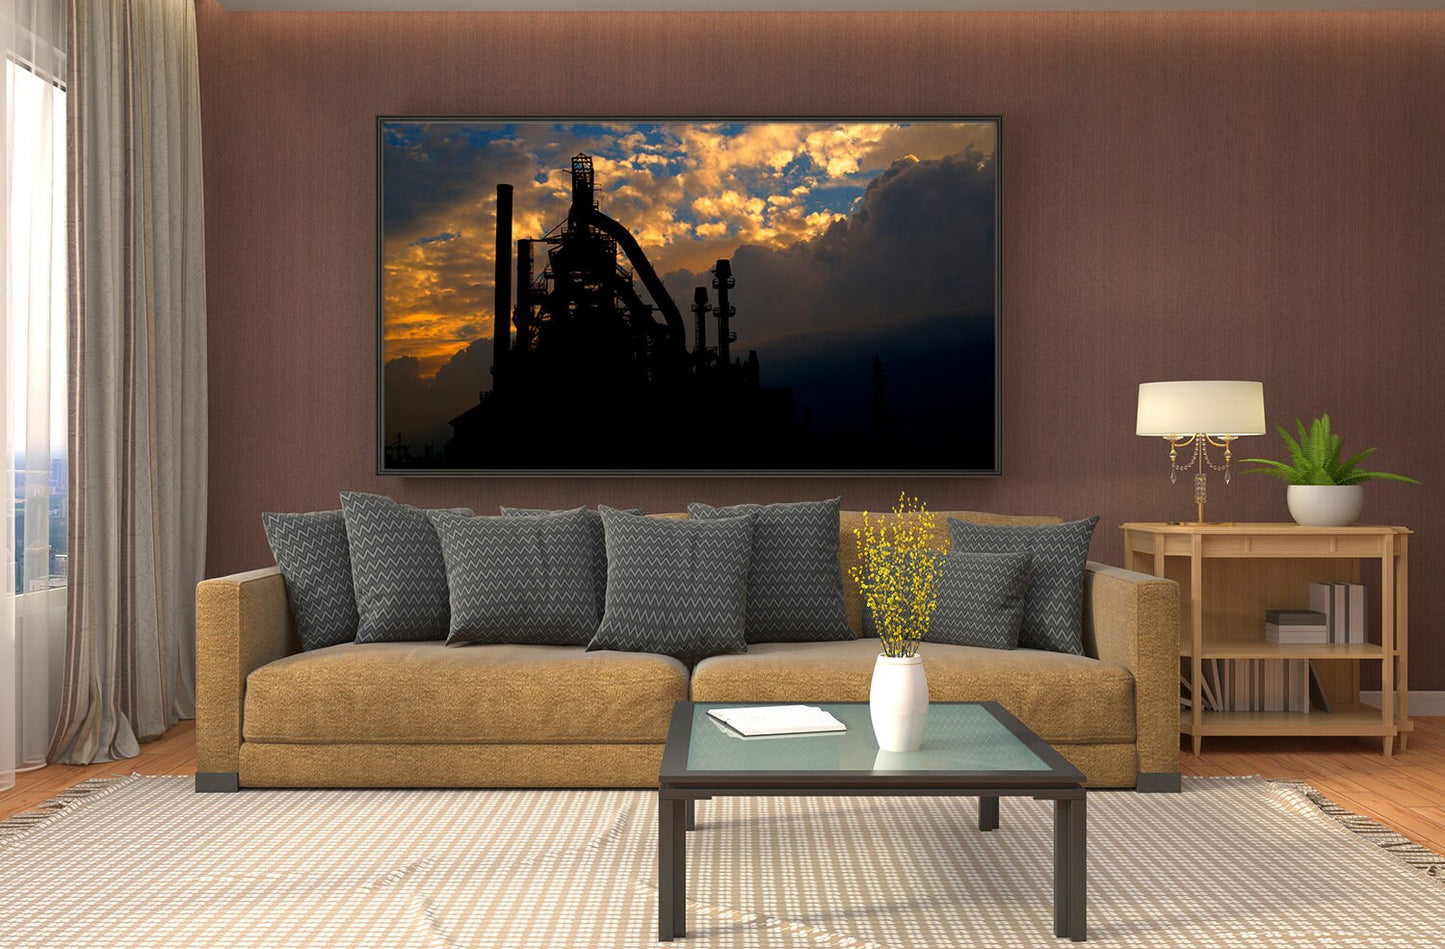 Bethlehem Steel Silhouette Pictures: Night Sky Backdrop for Loft Wall Art & Garage Decor - Bethlehem PA, Industrial Factory Art